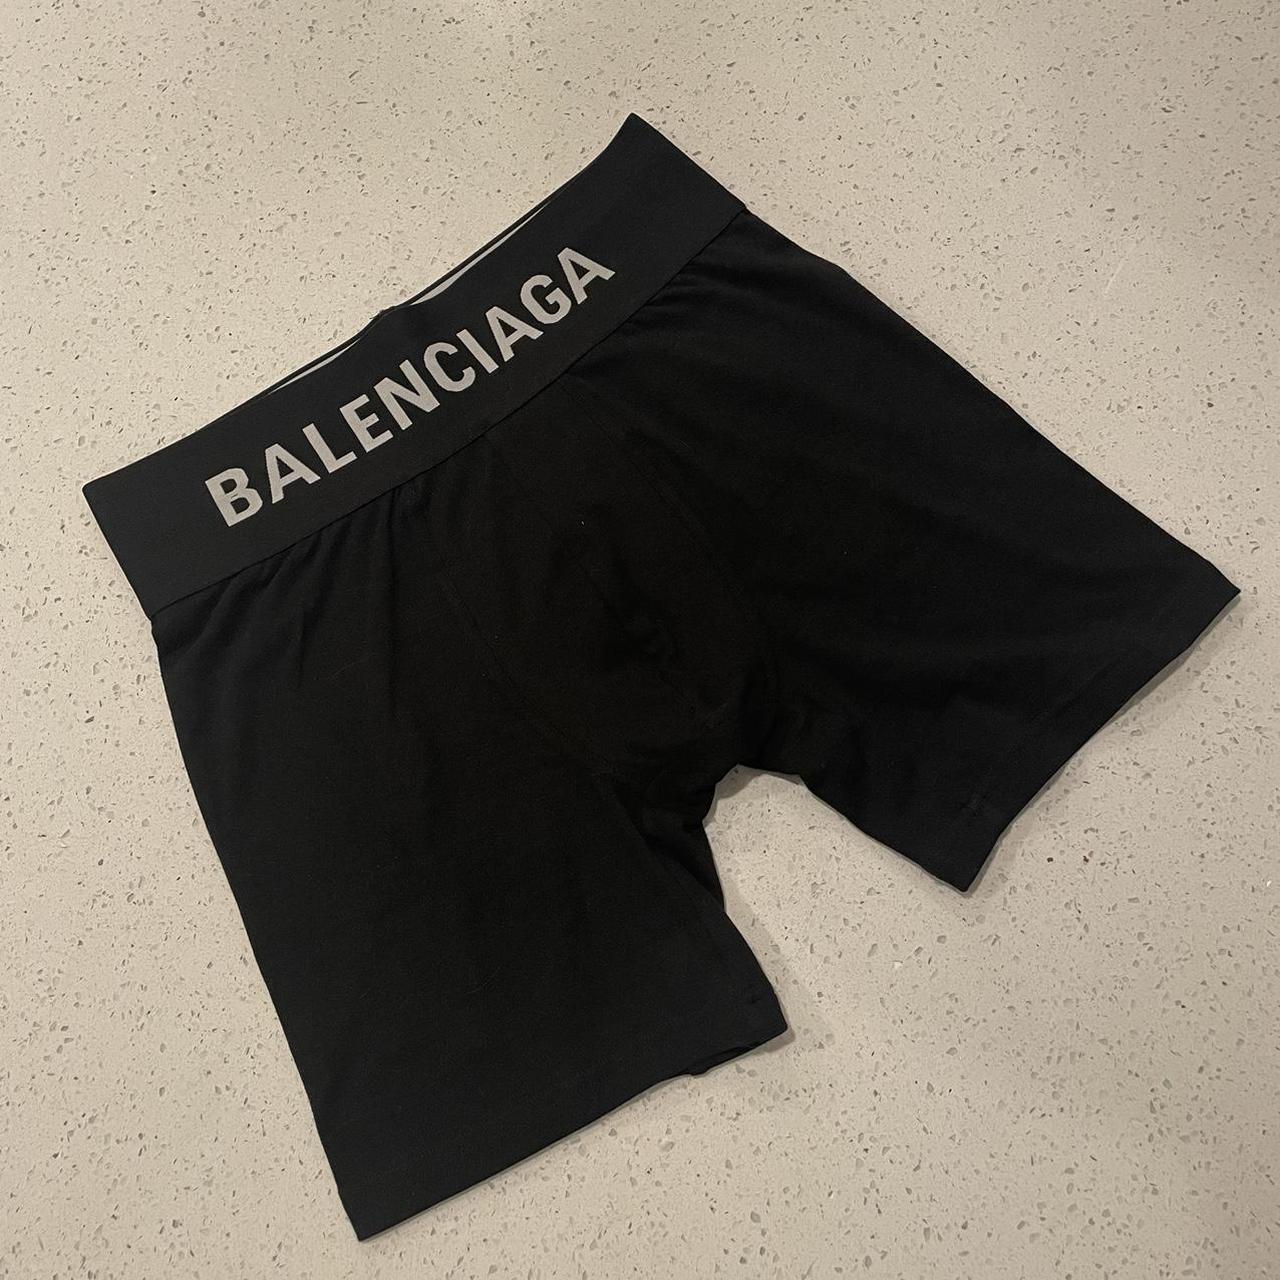 Balenciaga Underwear Boxers Size Medium 🧳Item - Depop